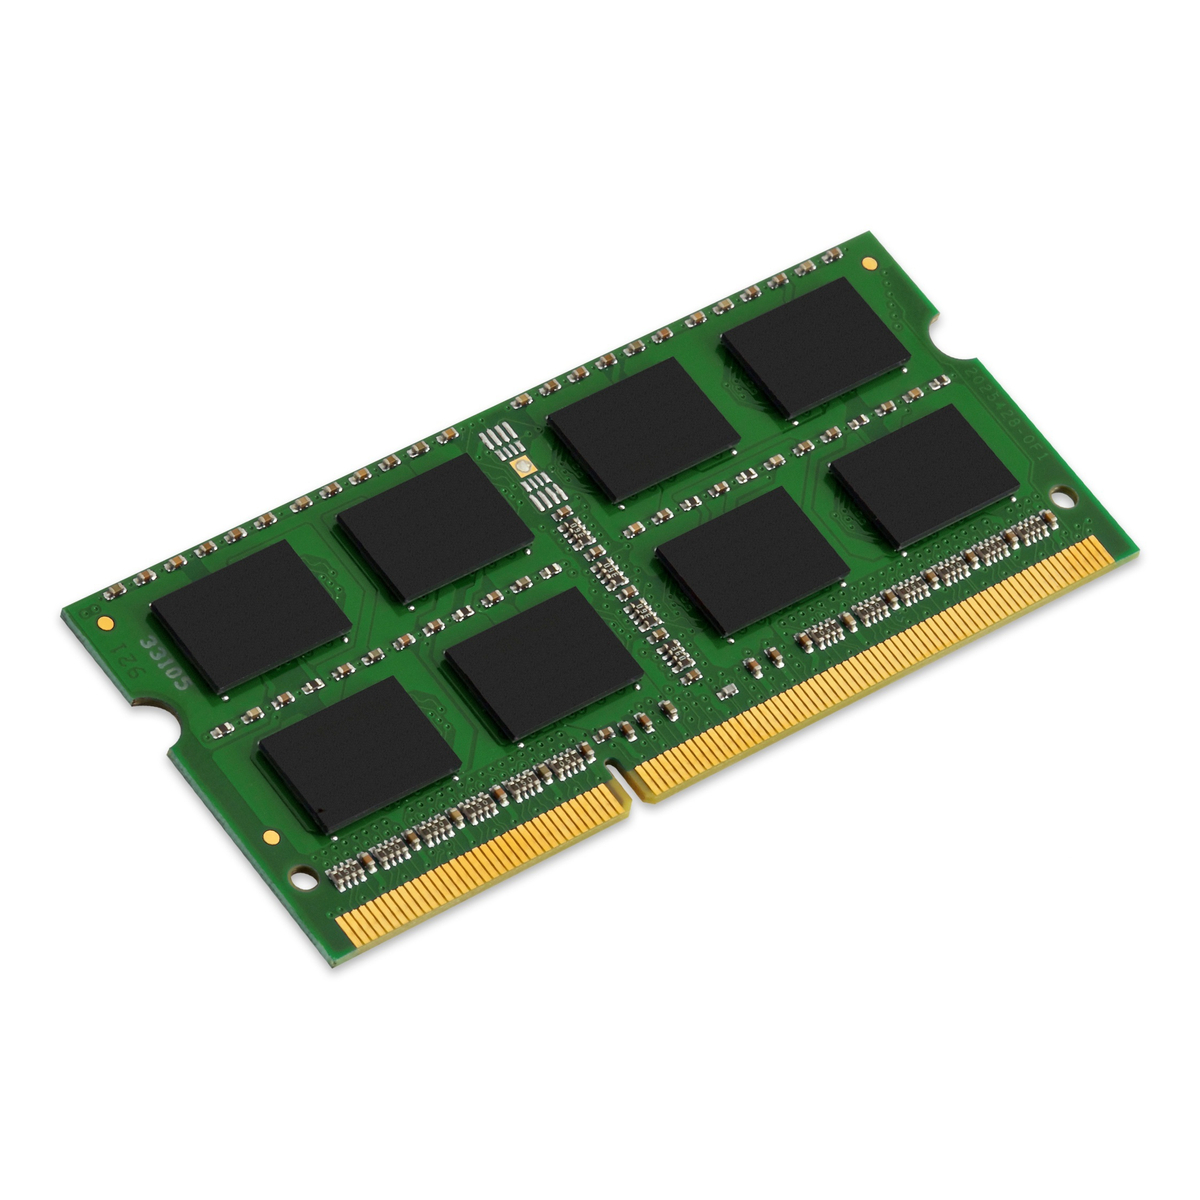 DDR3L 1600MHz 8GB Low Voltage SODIMM